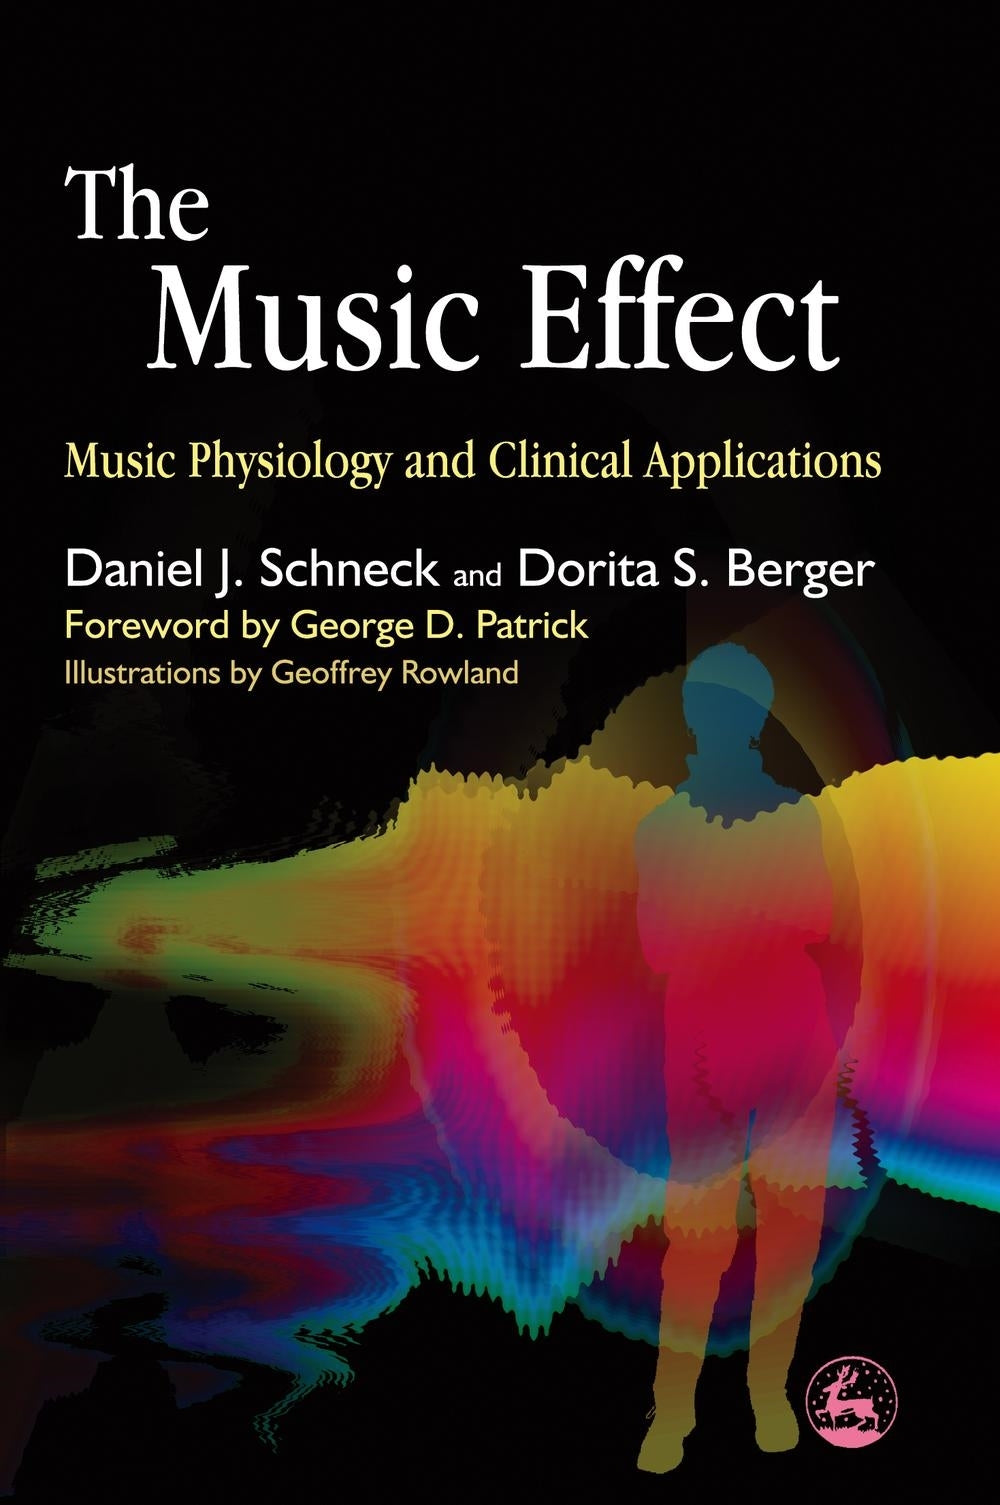 The Music Effect by Daniel J. Schneck, Dorita S. Berger